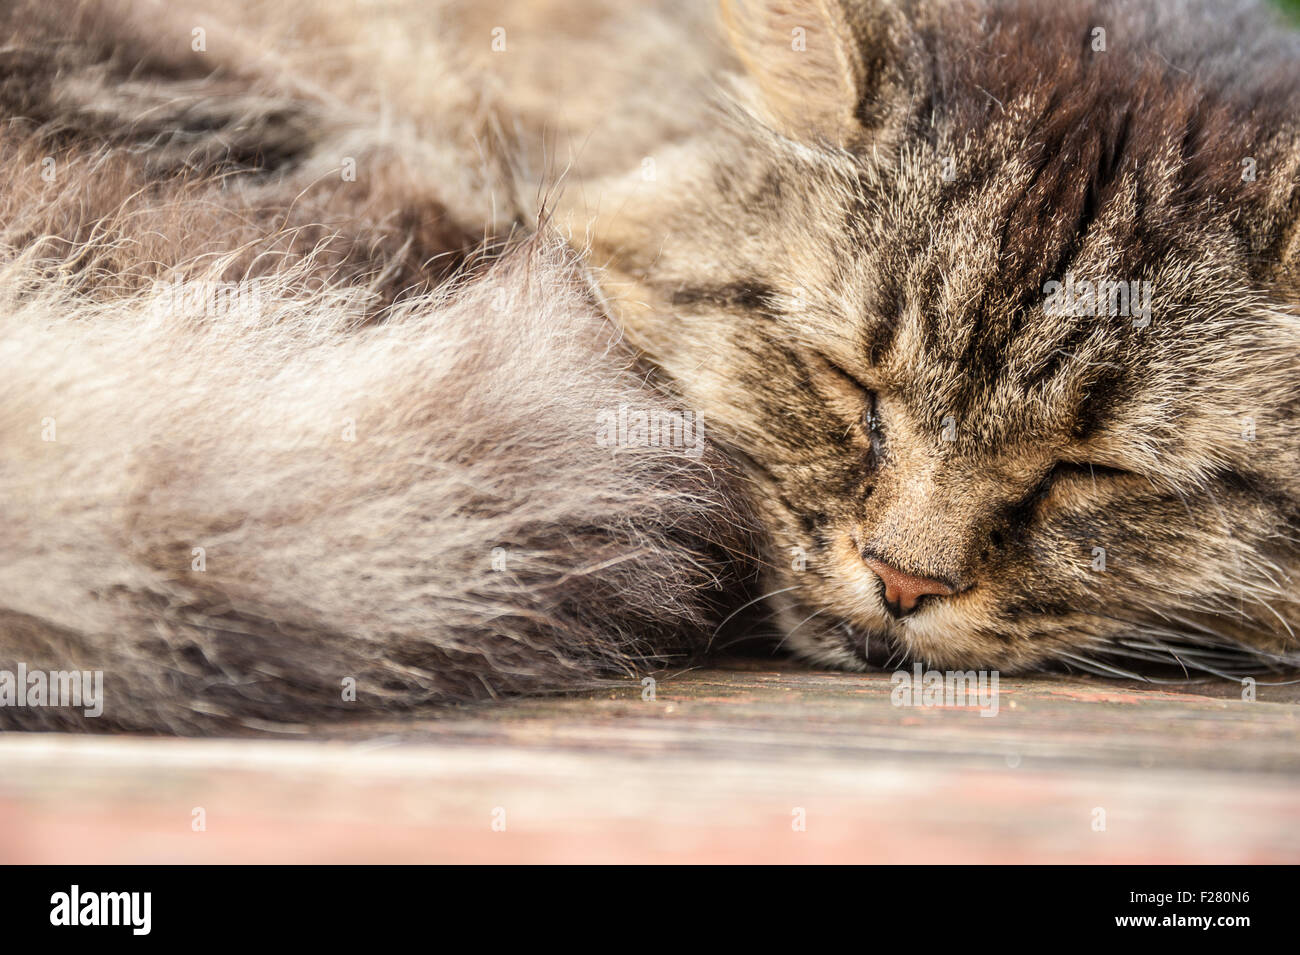 Tabby cat sleeping on an outdoor table. Stock Photo